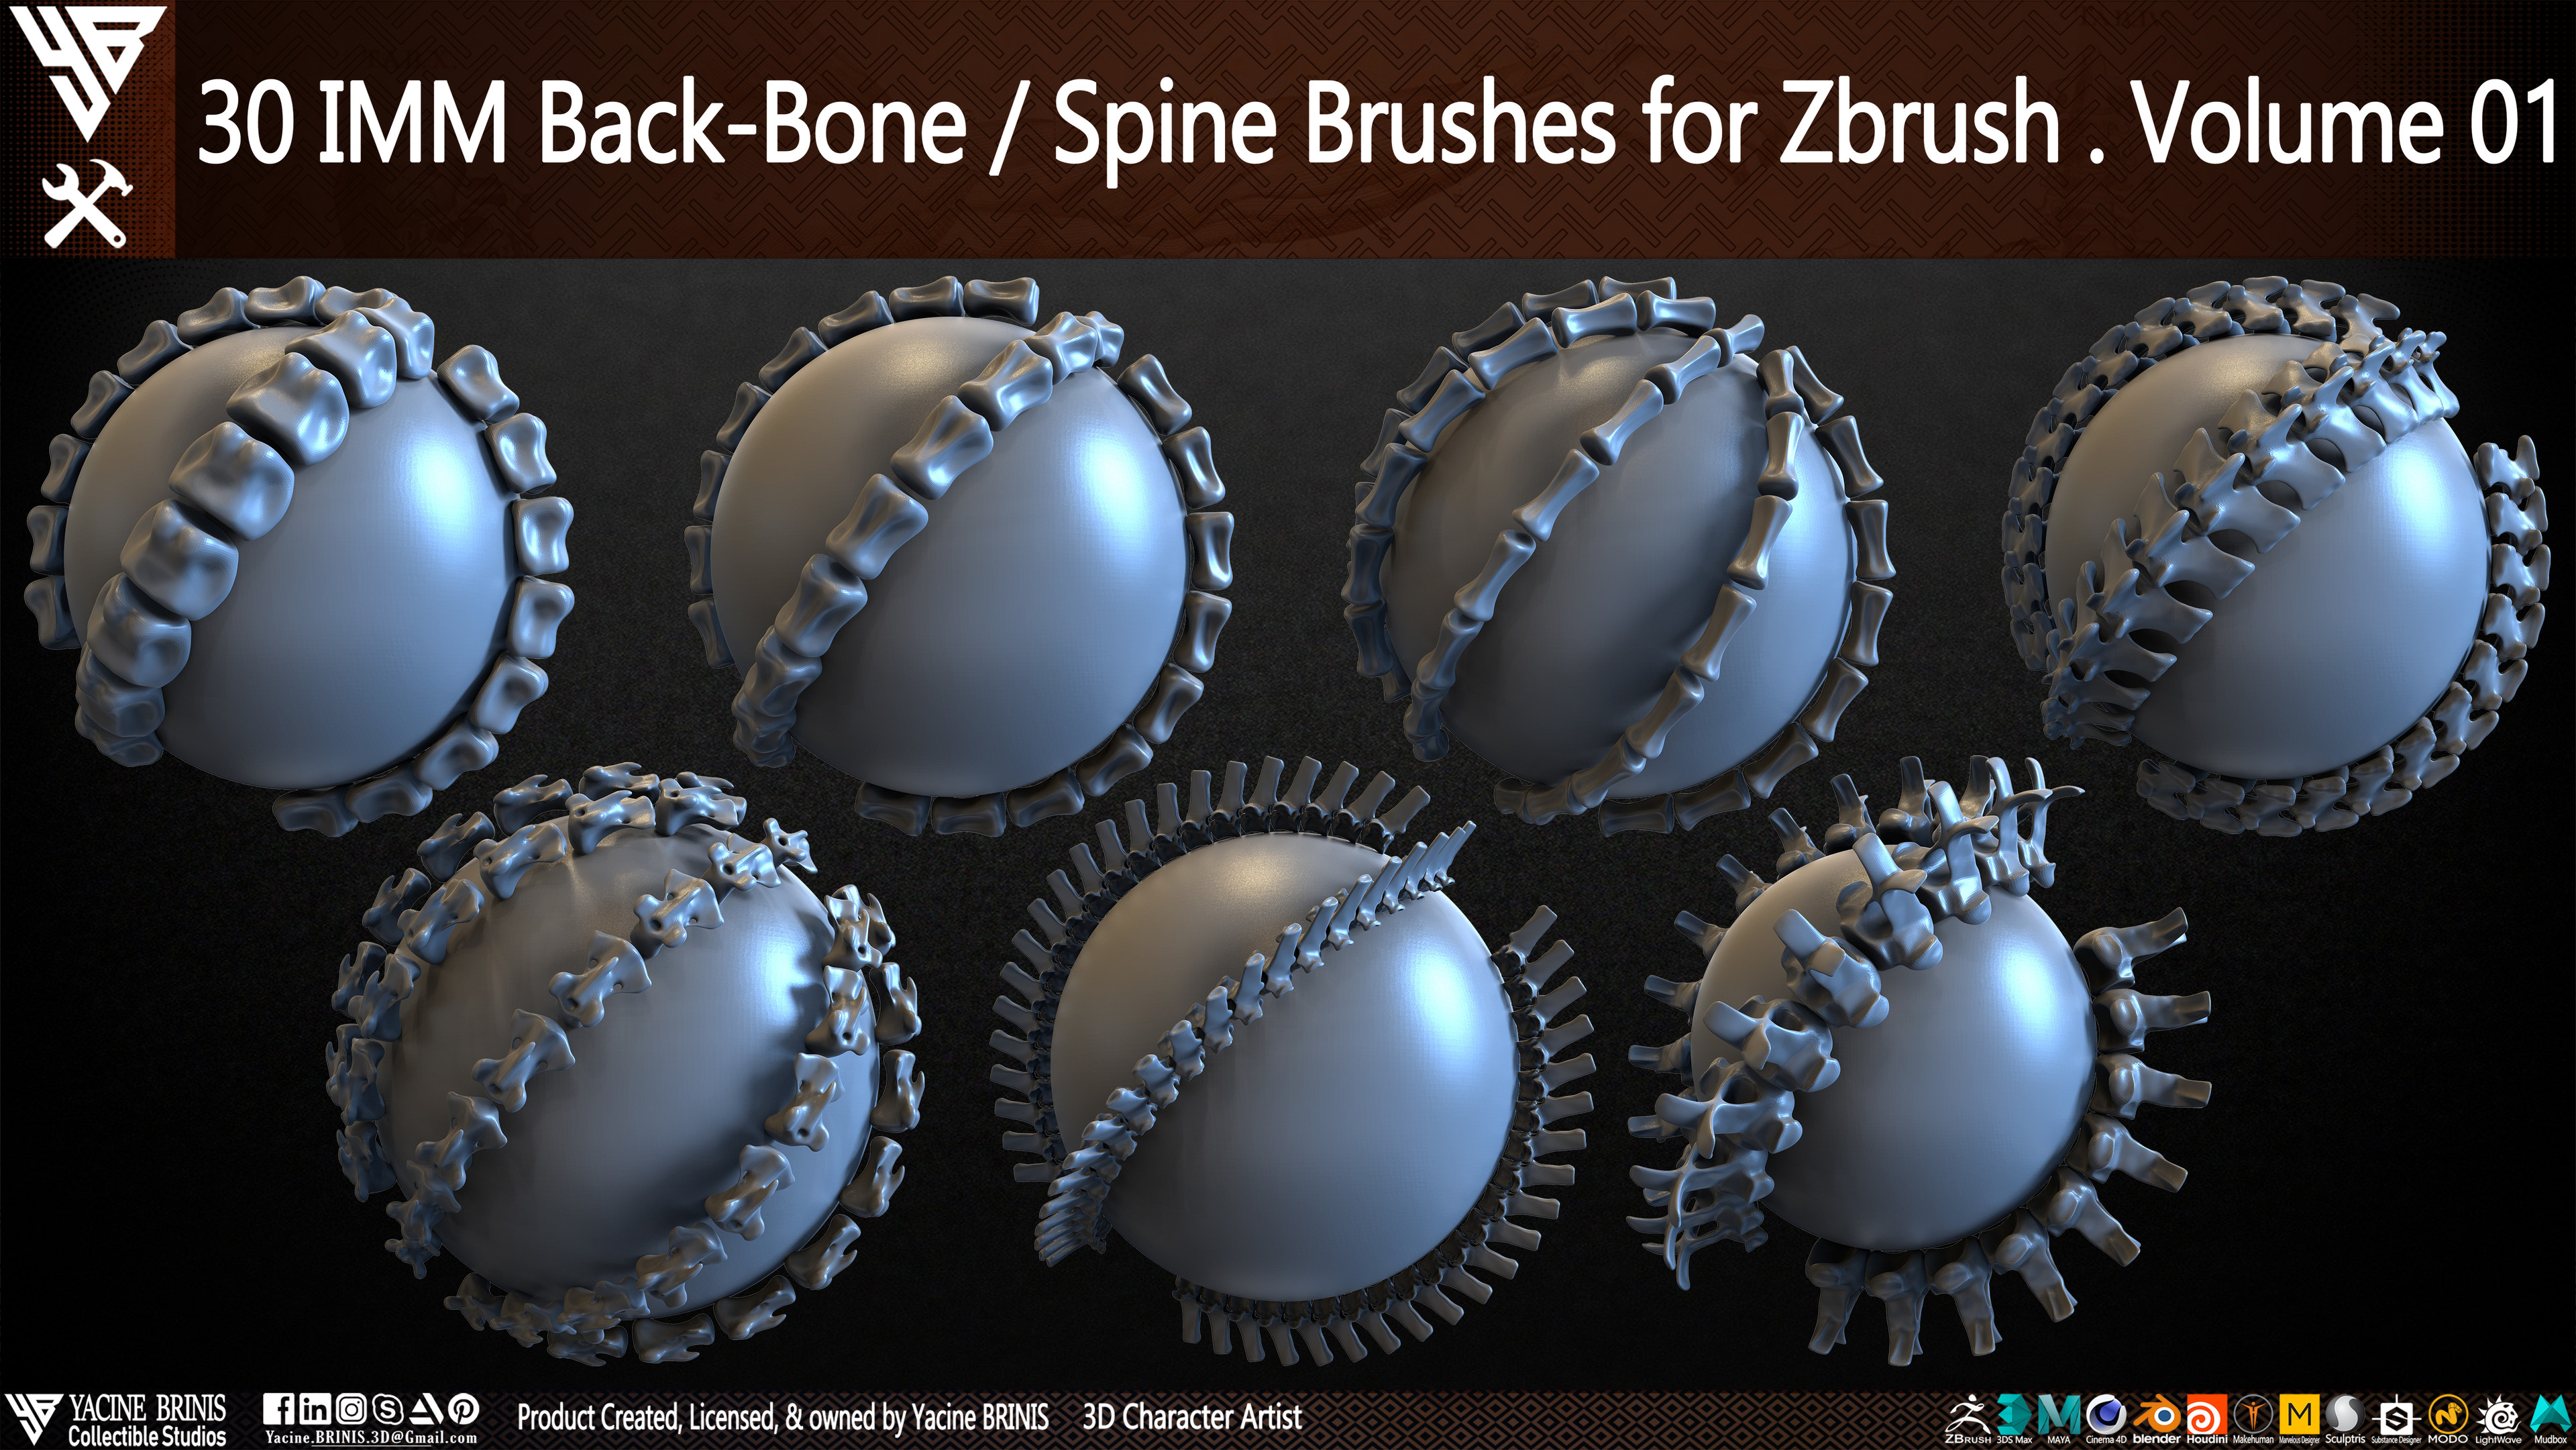 30 IMM Back-Bone - Spine Brushes for Zbrush Volume 01 Sculpted by Yacine BRINIS Set 001